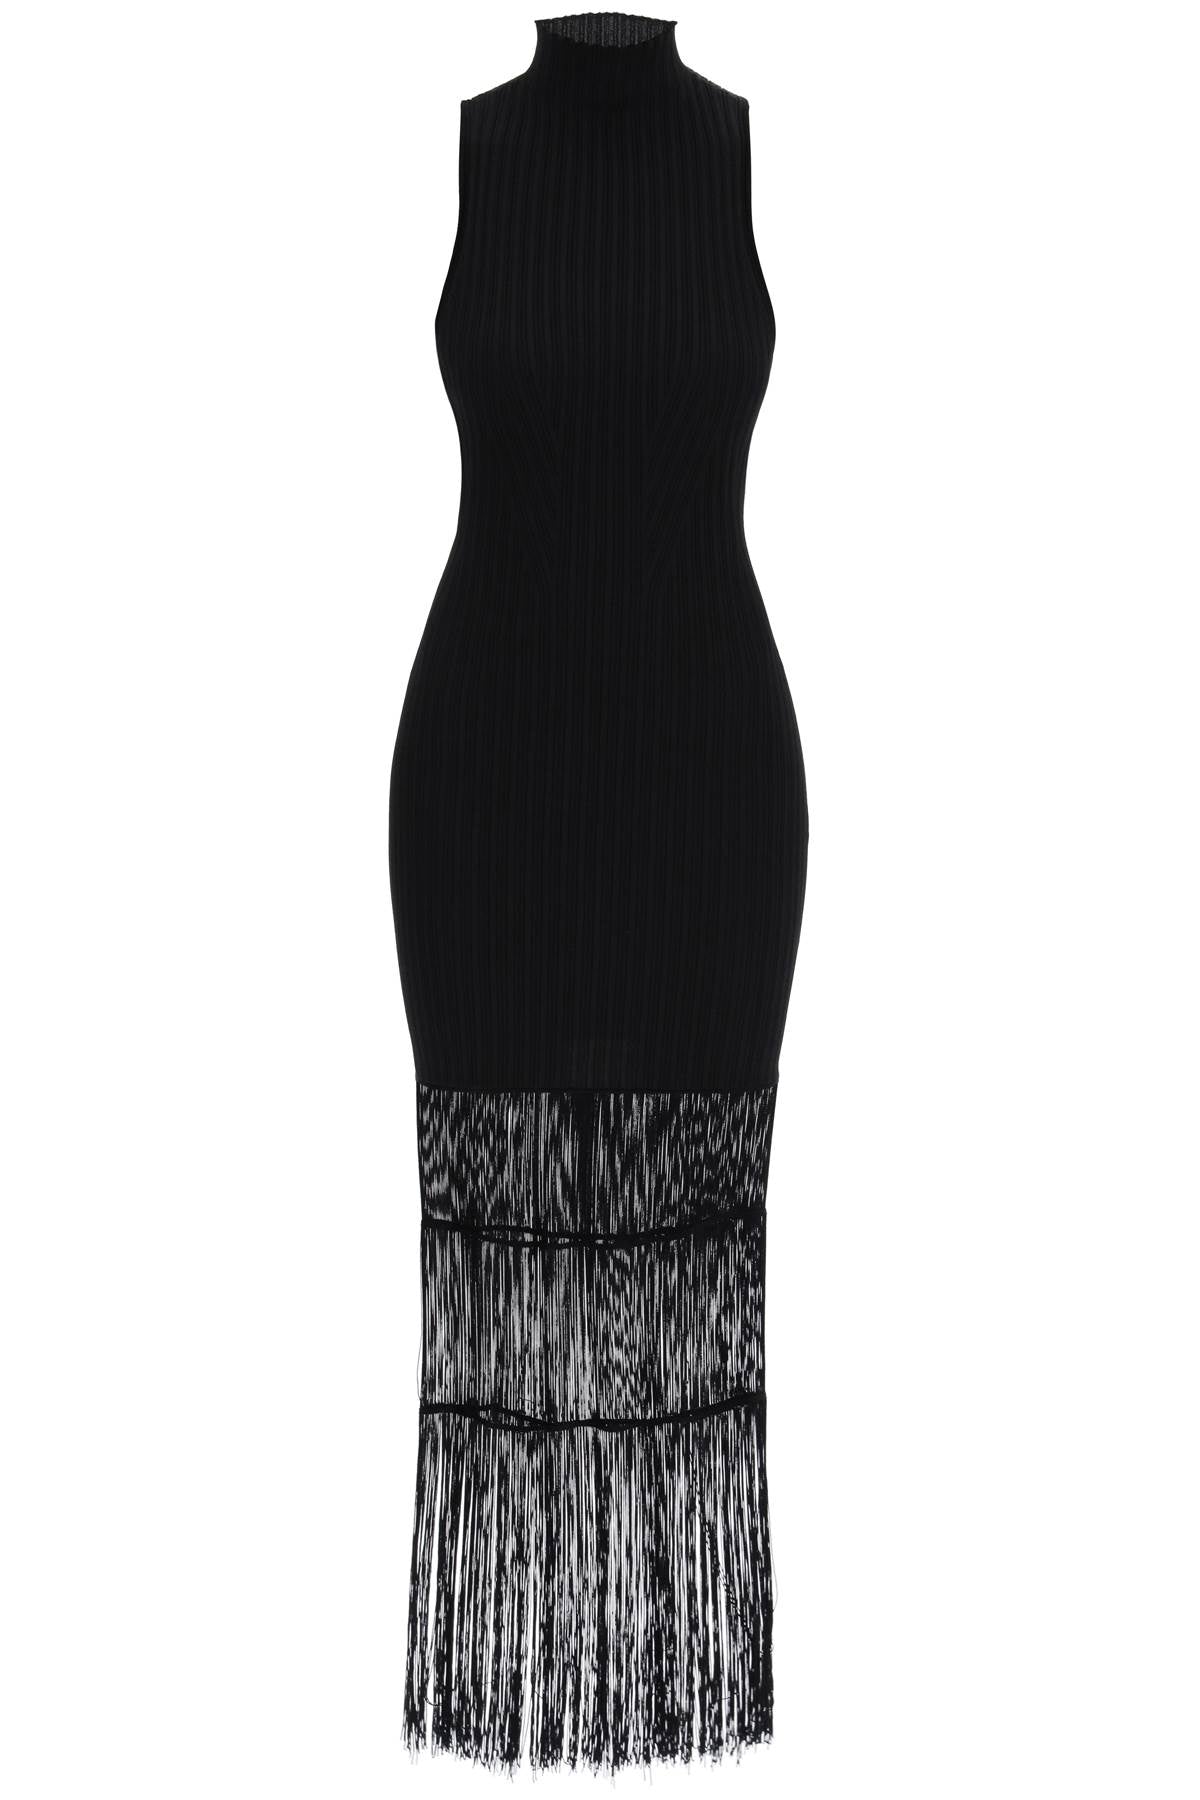 Khaite "ribbed knit dress with fringe details"-Dress-KHAITE-M-Urbanheer